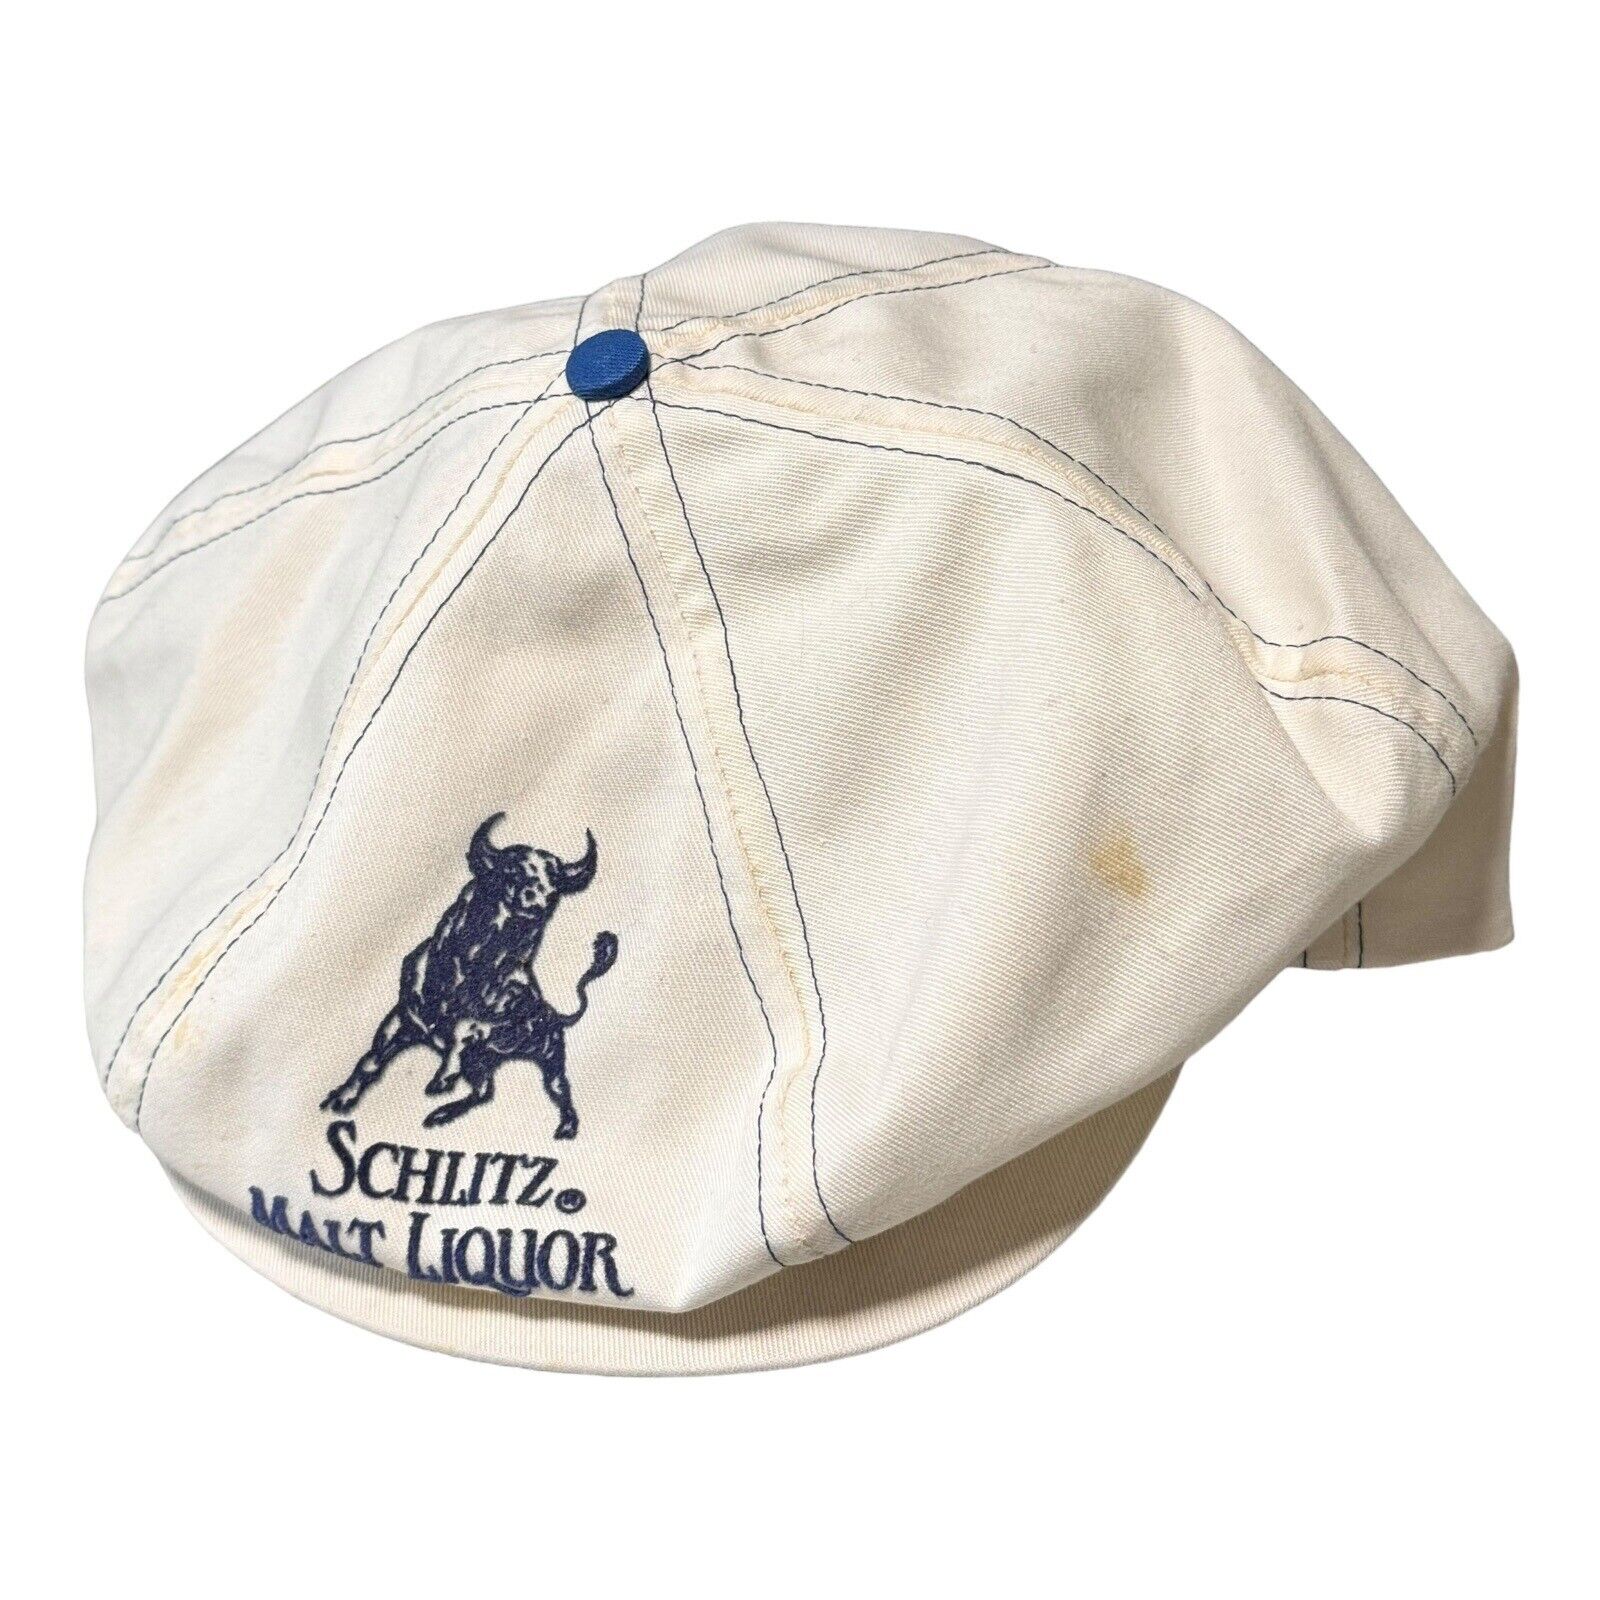 Schlitz Malt Liquor Newsboy Newsie Snapback Vintage Saint Louis Hat